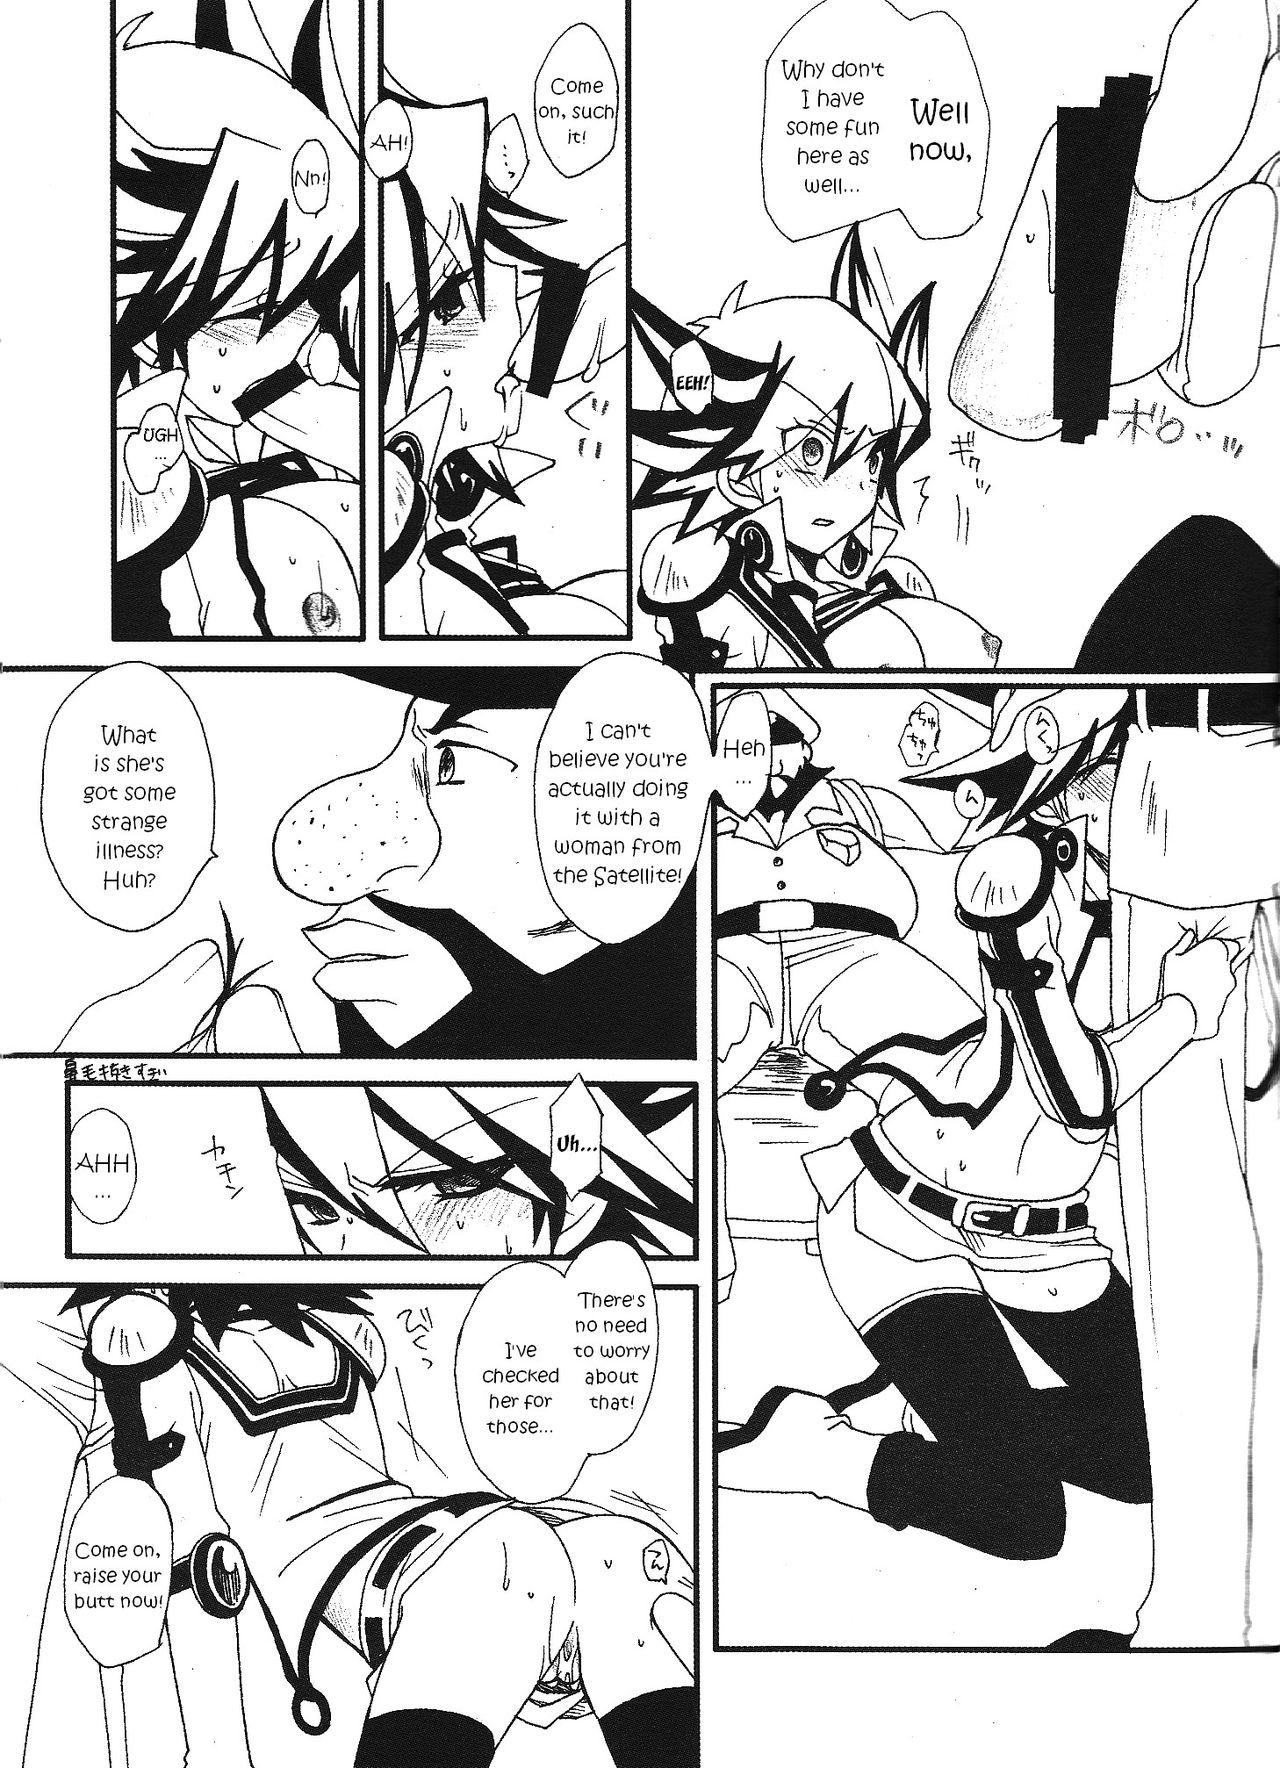 Read [ghost Marin ] Angura Yu Gi Oh 5d S [english] [ehcove] Hentai Online Porn Manga And